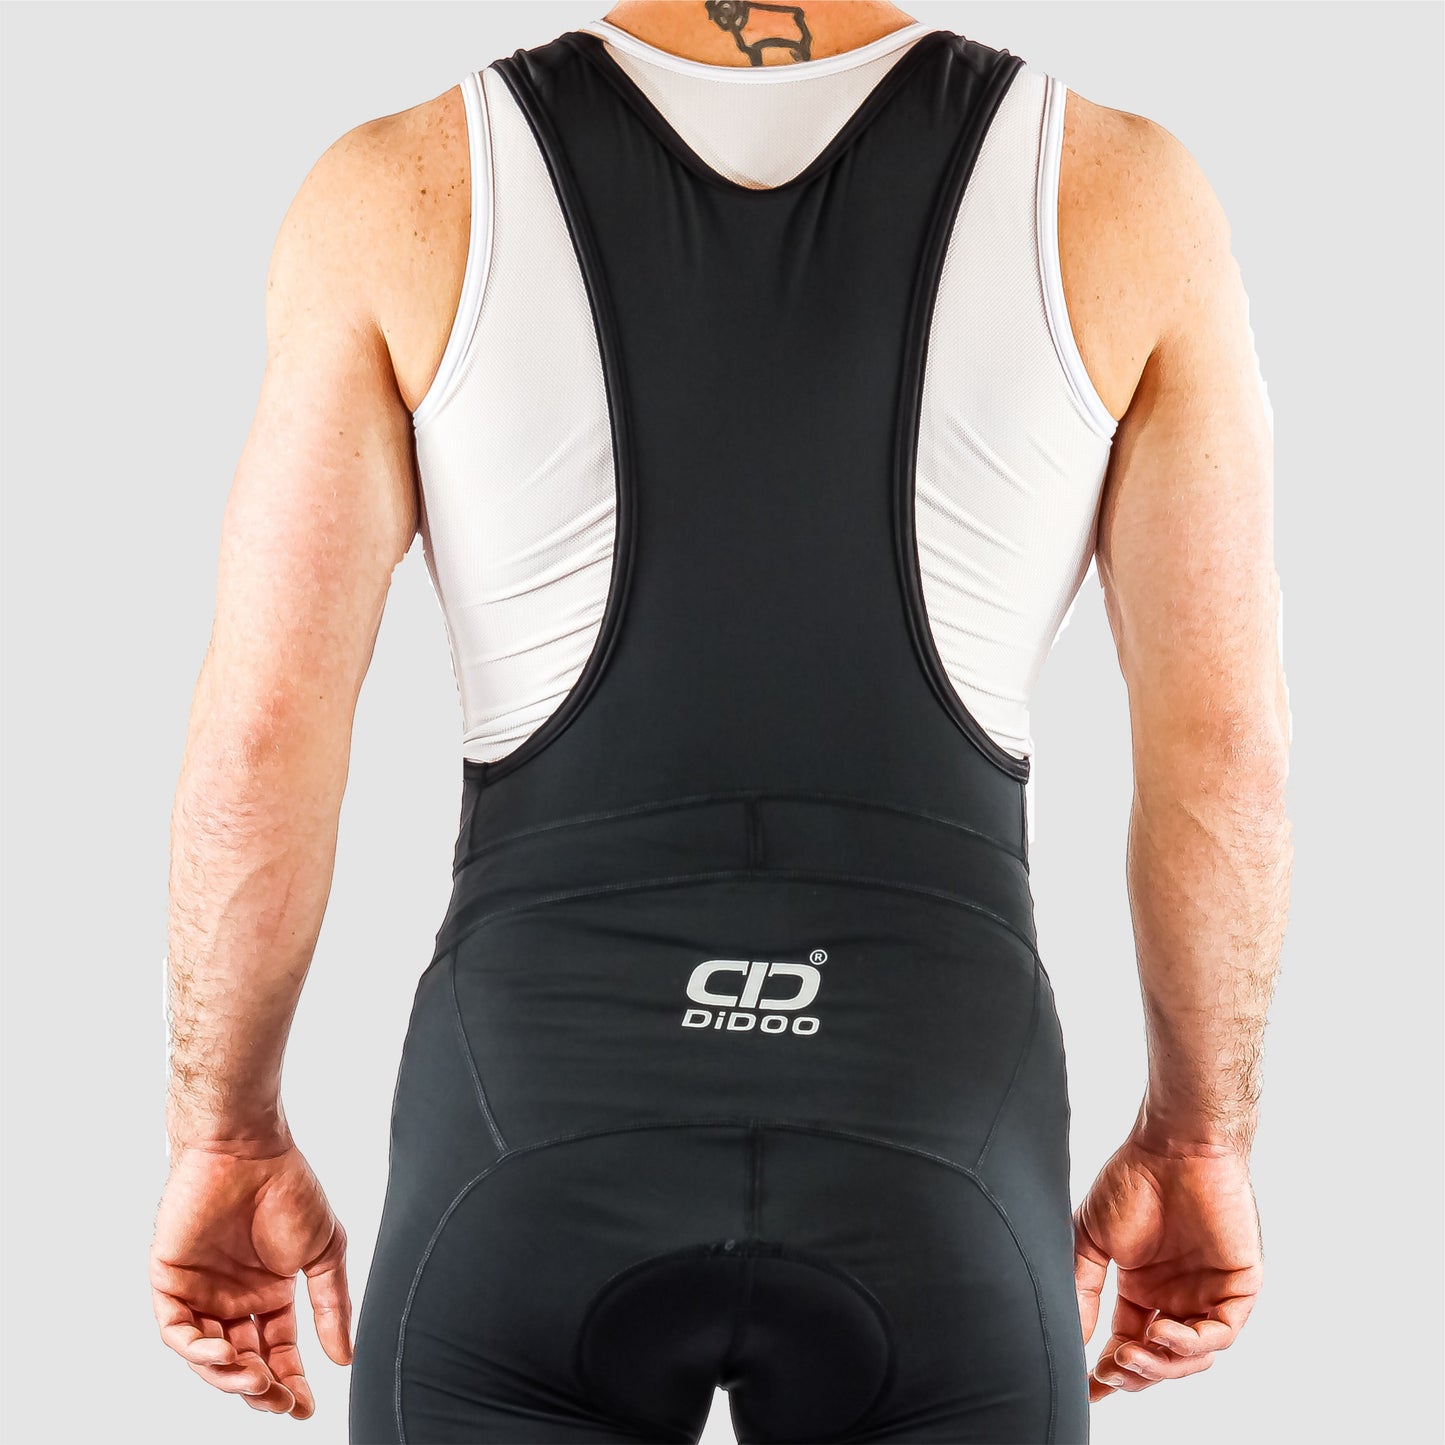 DiDoo Men's Pro Cycling Bib Tights Black and Multi Colour Strips